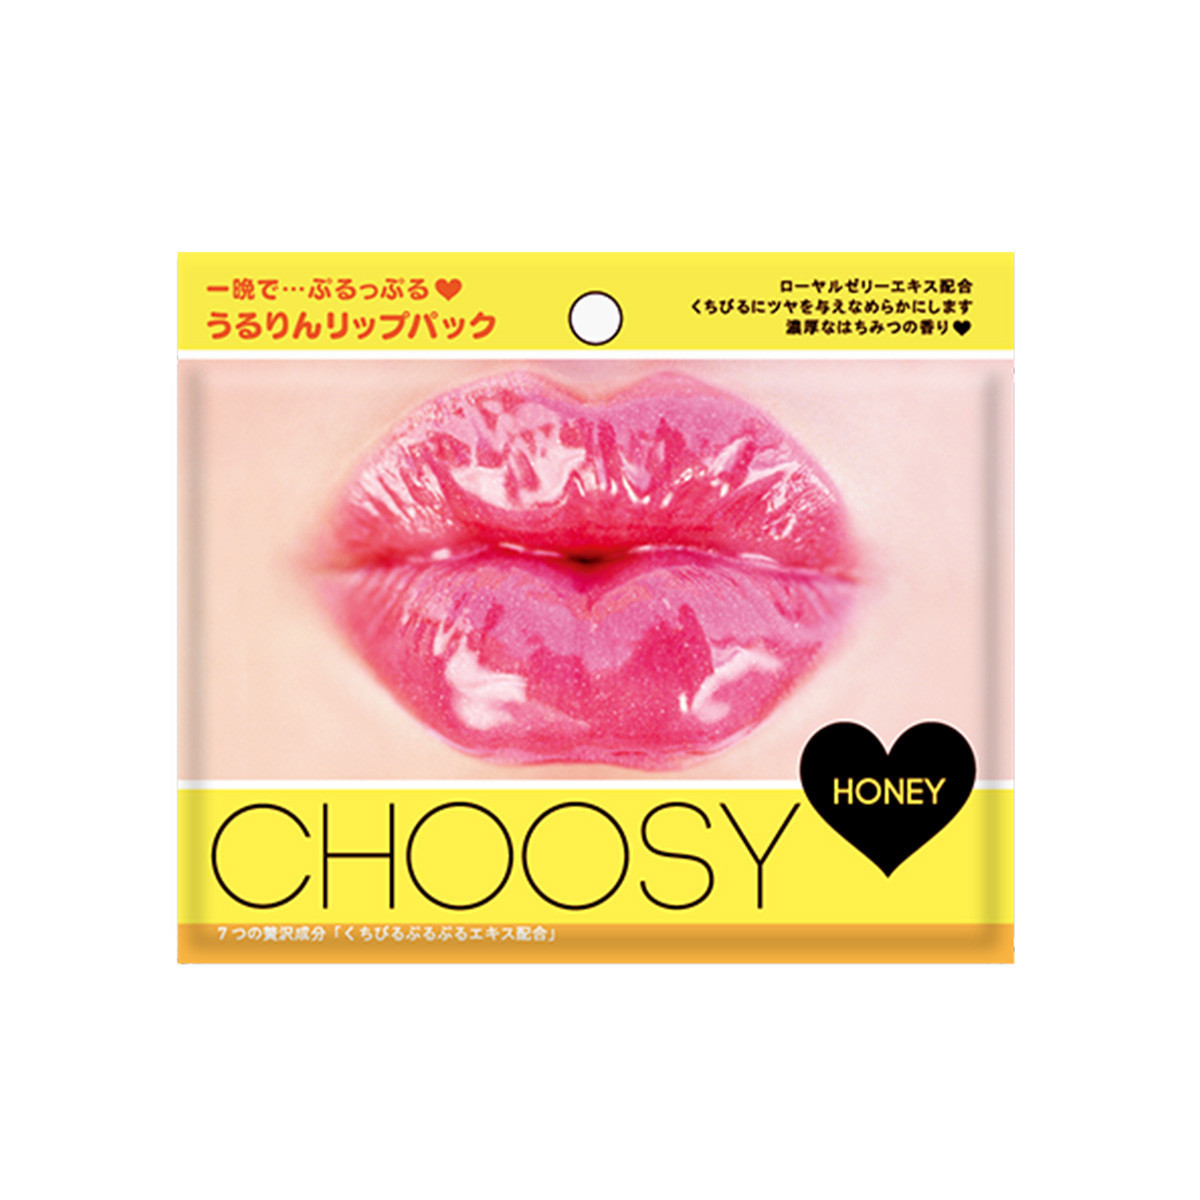 PURE SMILE Choosy Lip Pack Honey